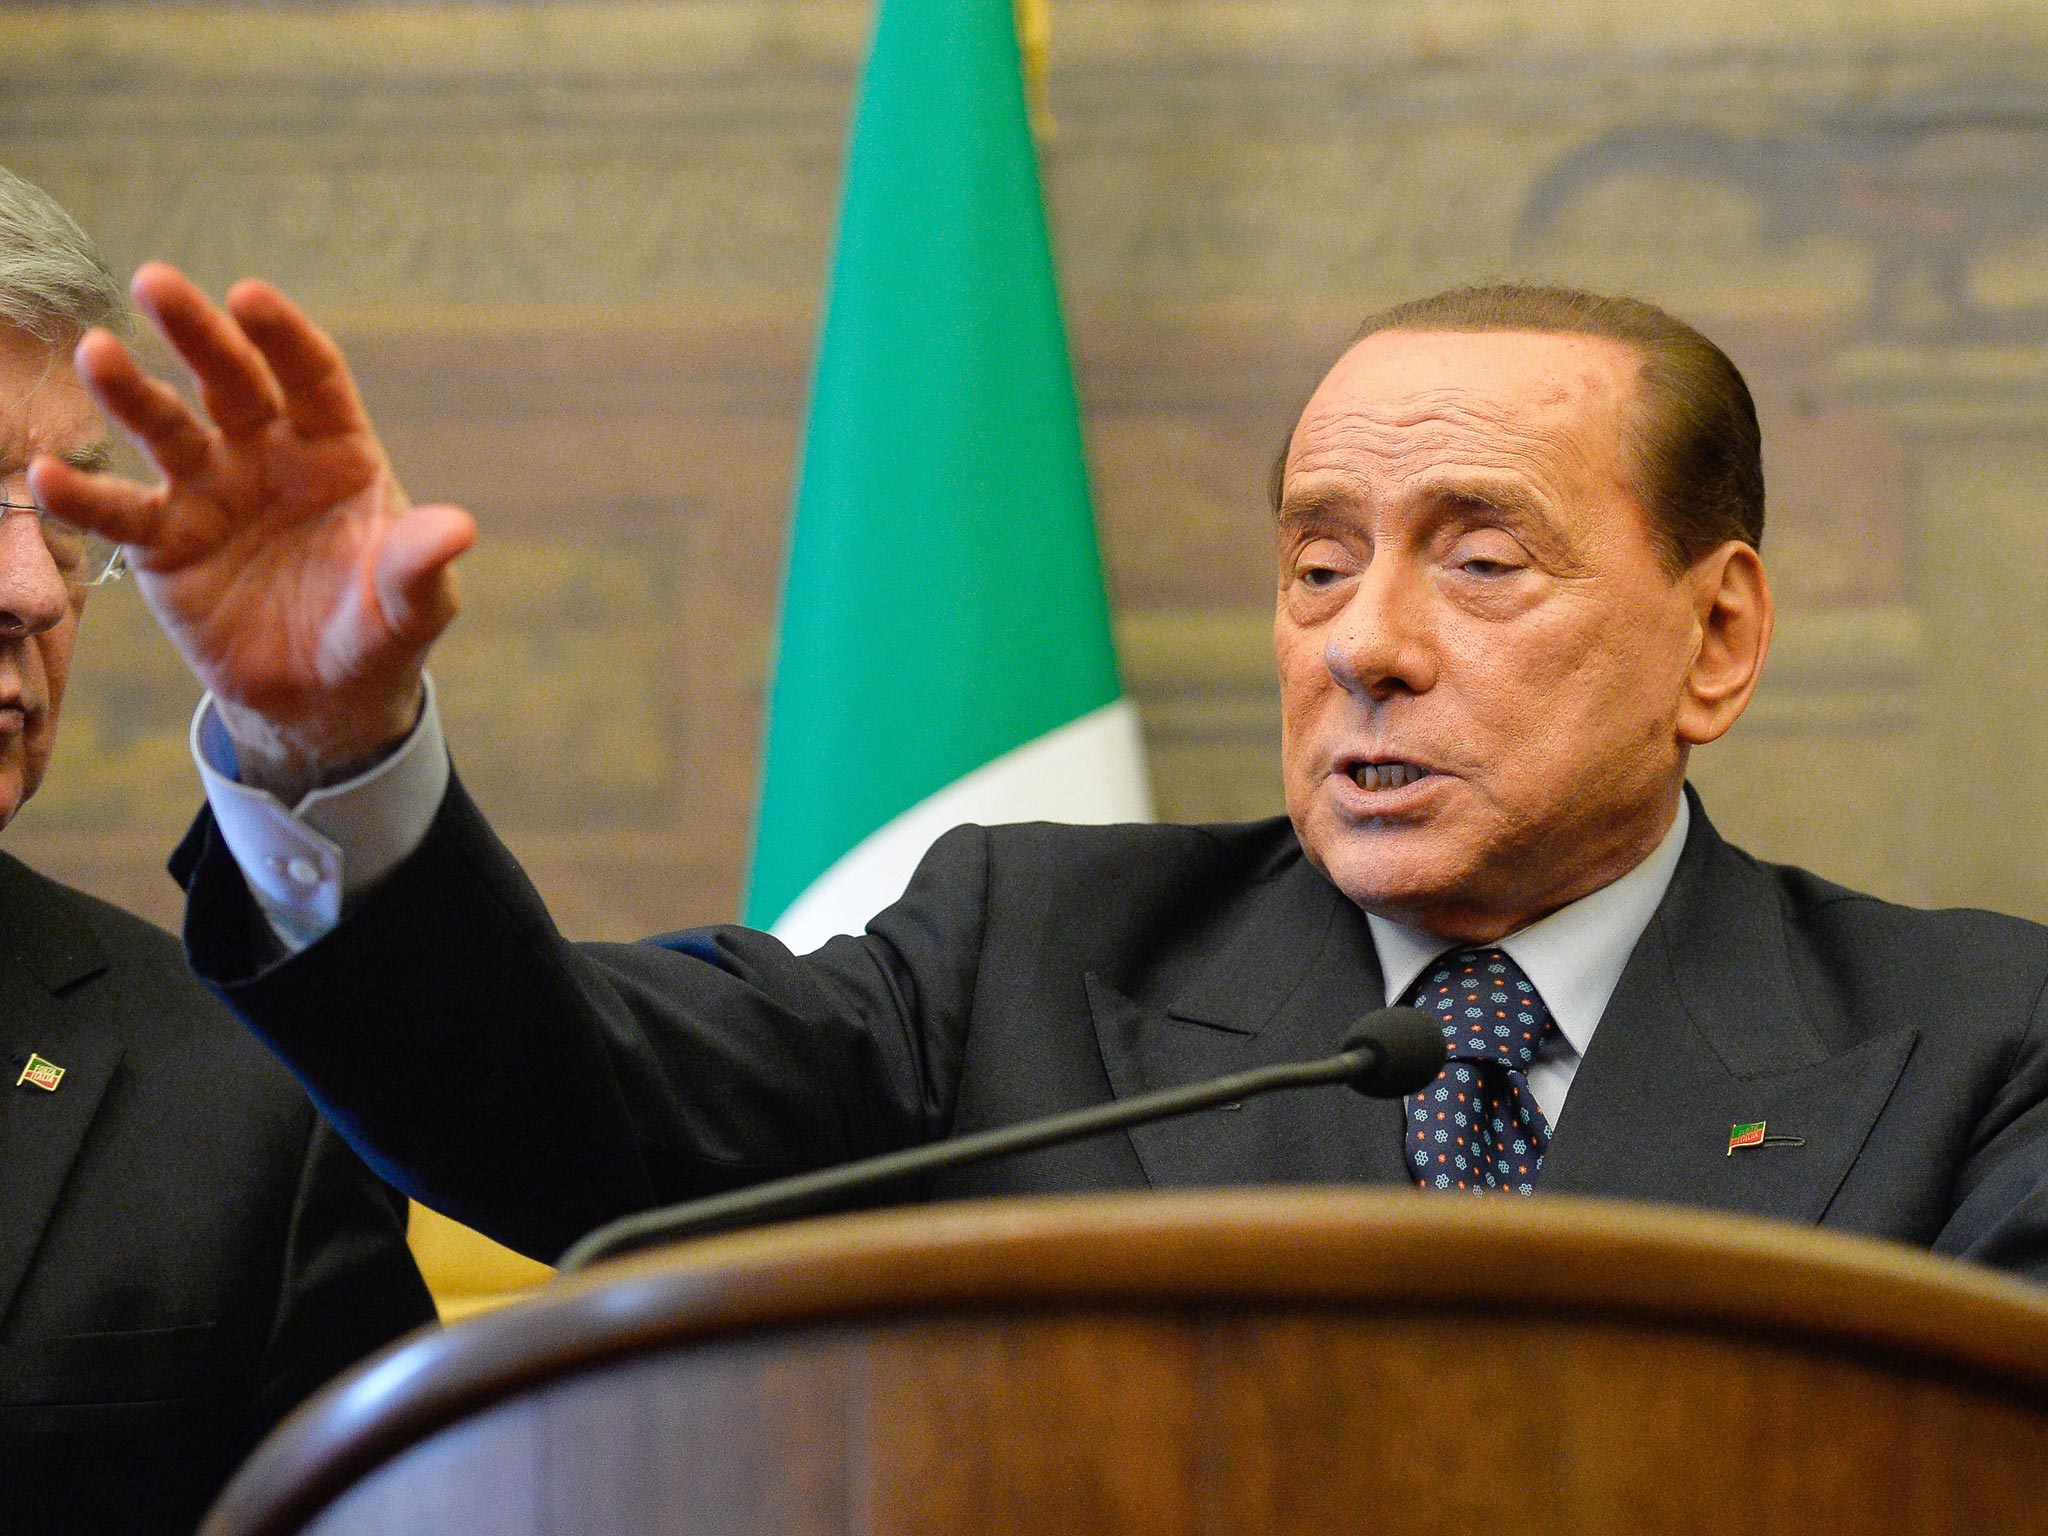 Disgraced former Italian Prime Minister Silvio Berlusconi has been advising the US ambassador in Rome